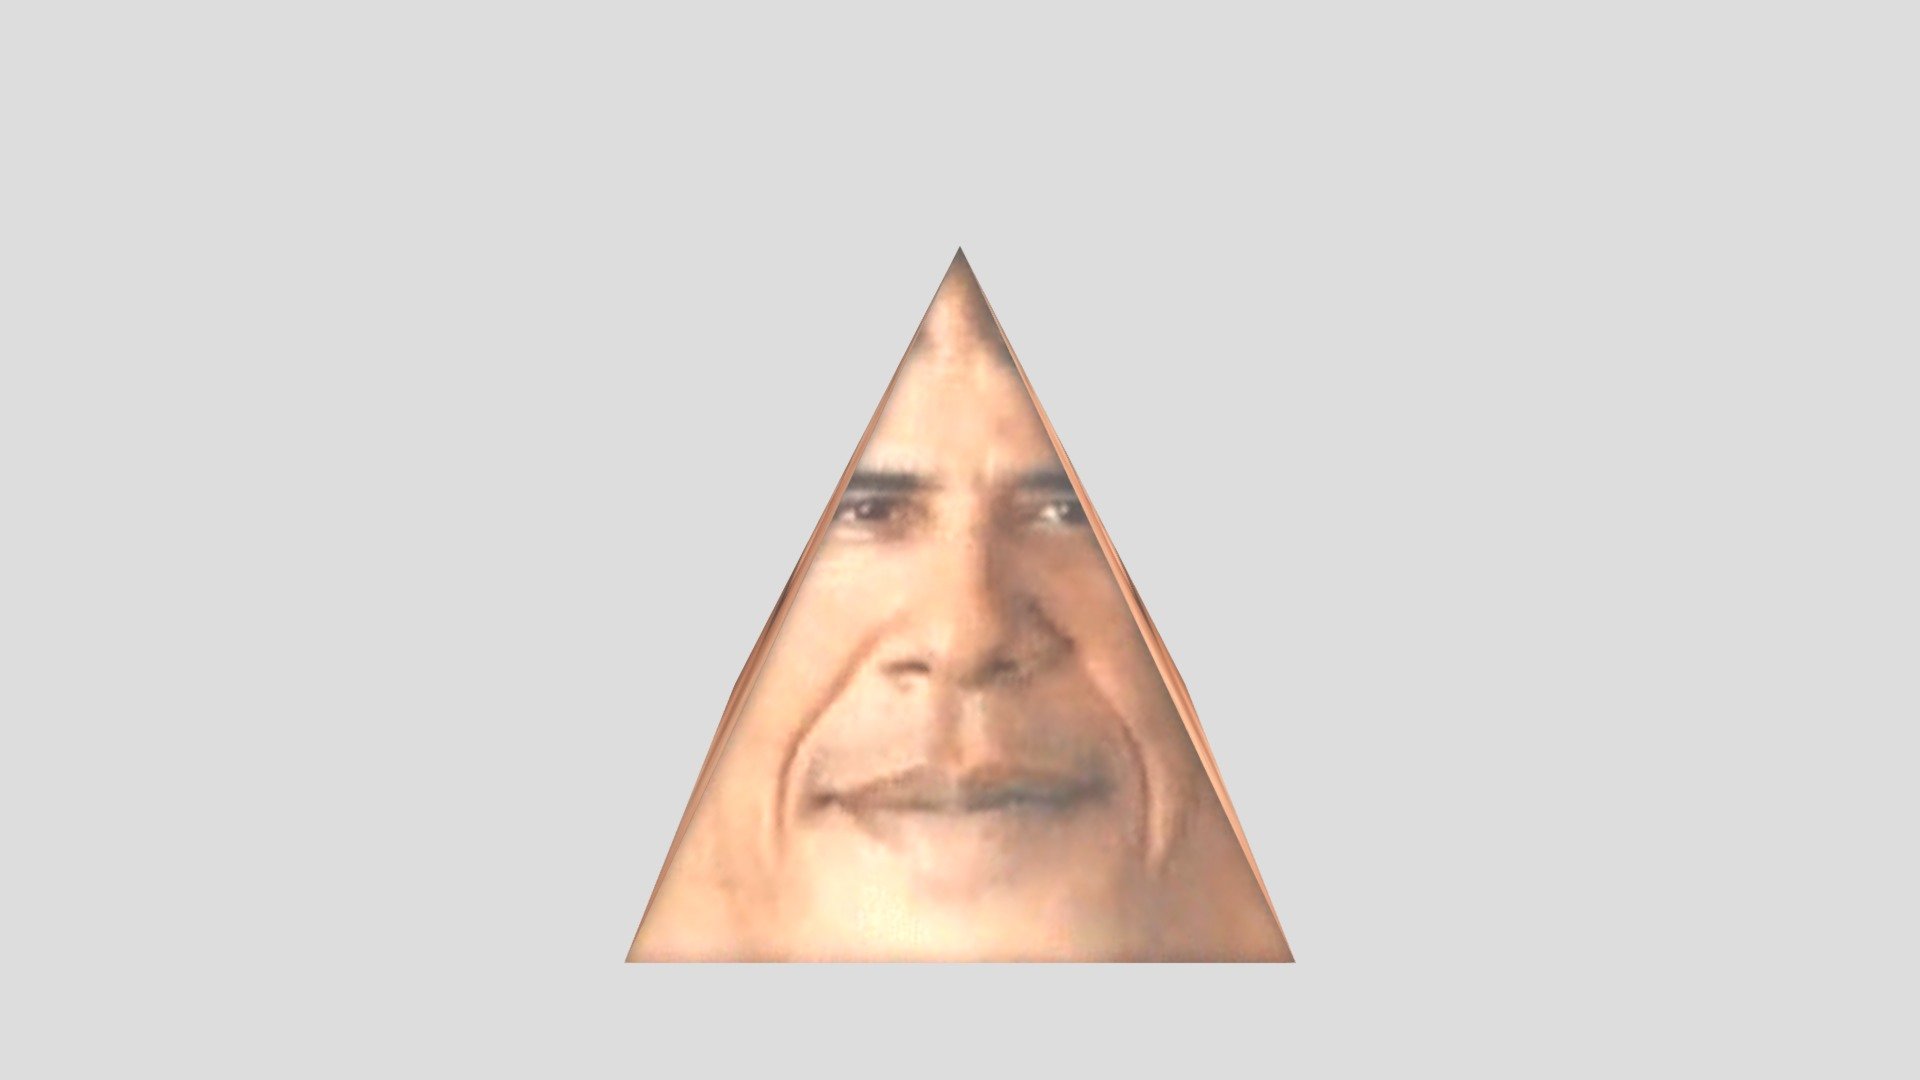 Obama Prism Download Free 3d Model By Urijah Ceballos 4539 Urijah756 582a3b6 Sketchfab 7522